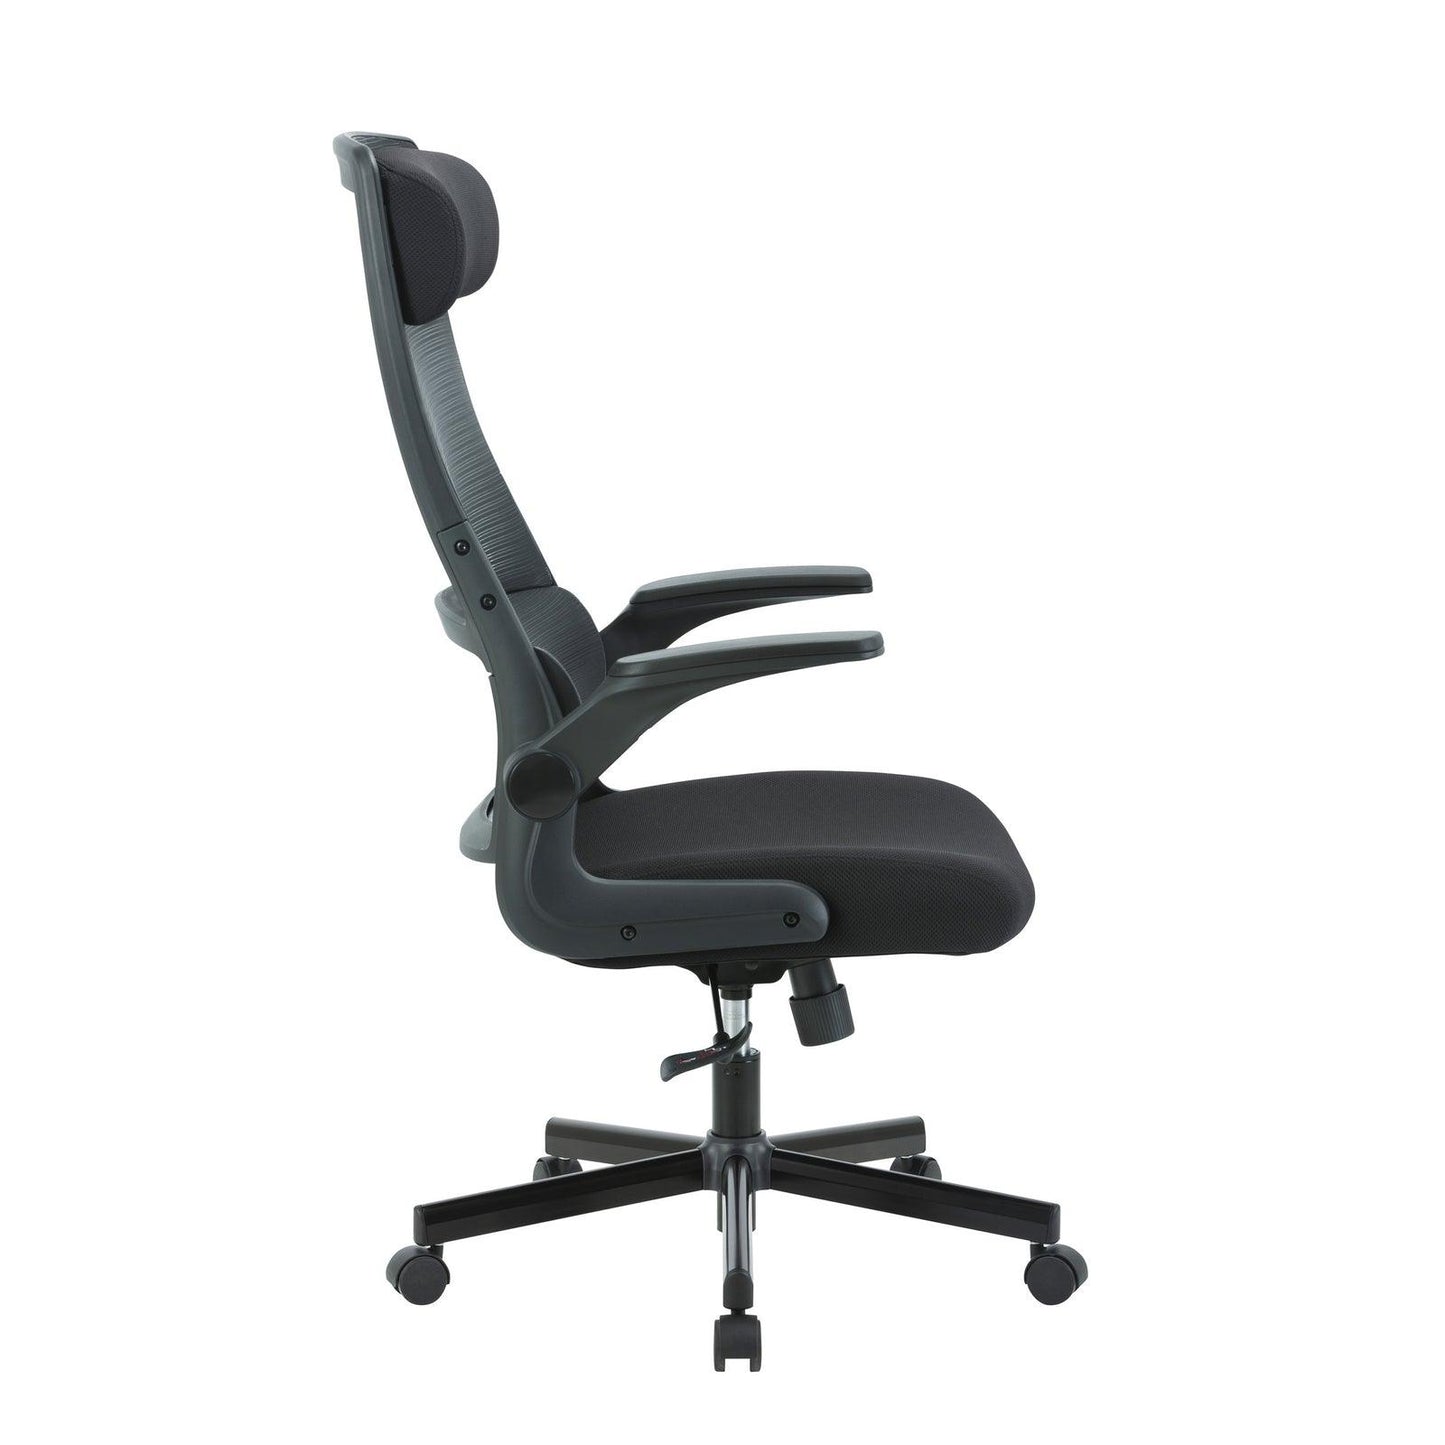 Mesh Ergonomic Office Chair - Black - Office/Gaming ChairsOC8251-UN 6